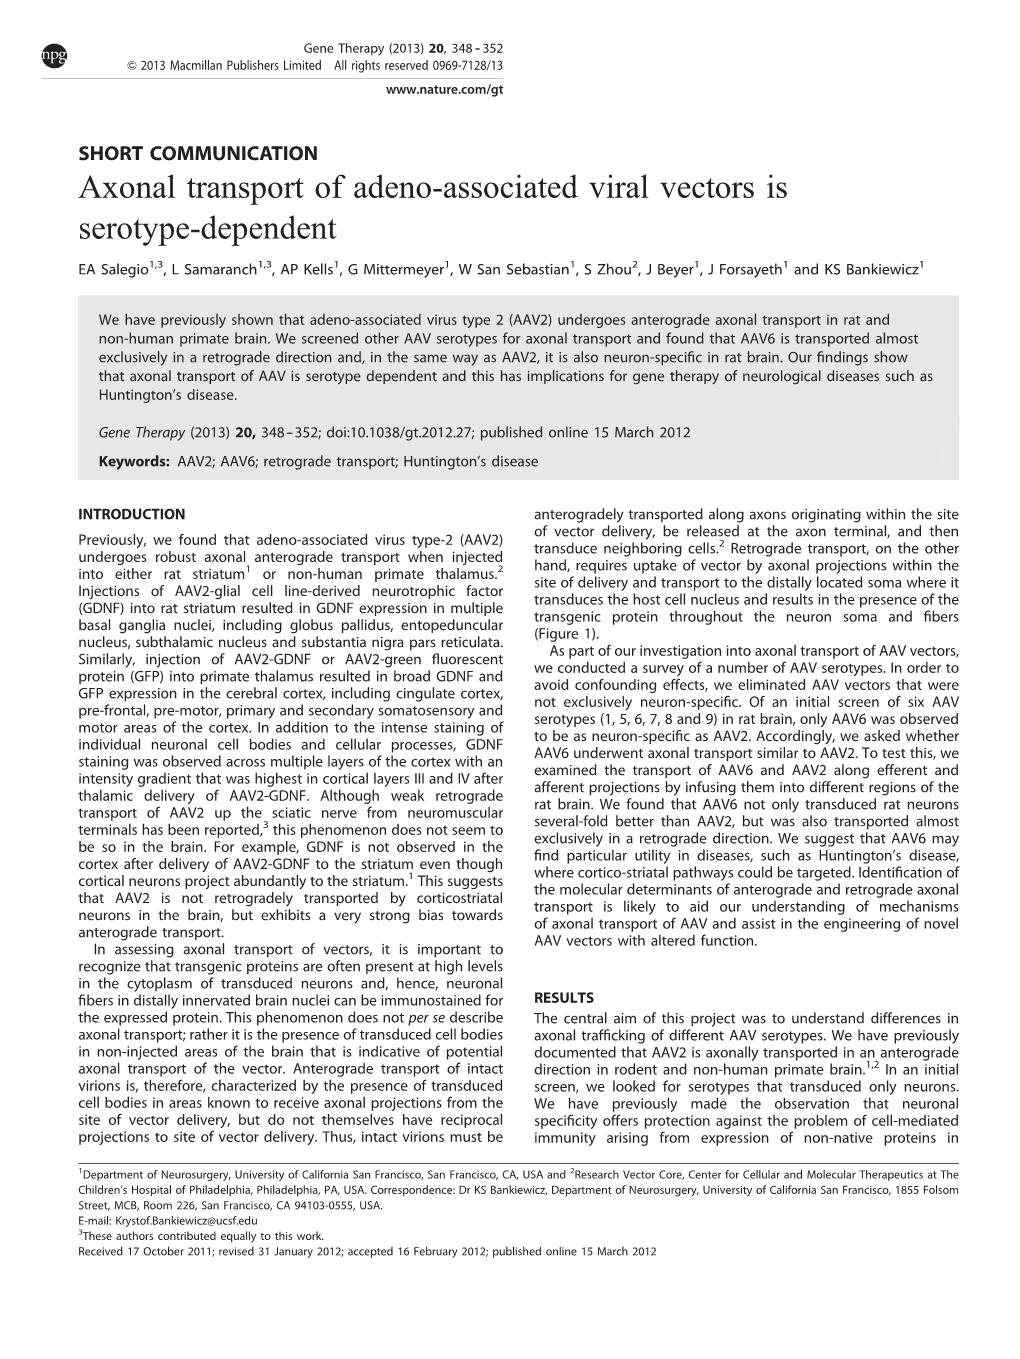 Axonal Transport of Adeno-Associated Viral Vectors Is Serotype-Dependent